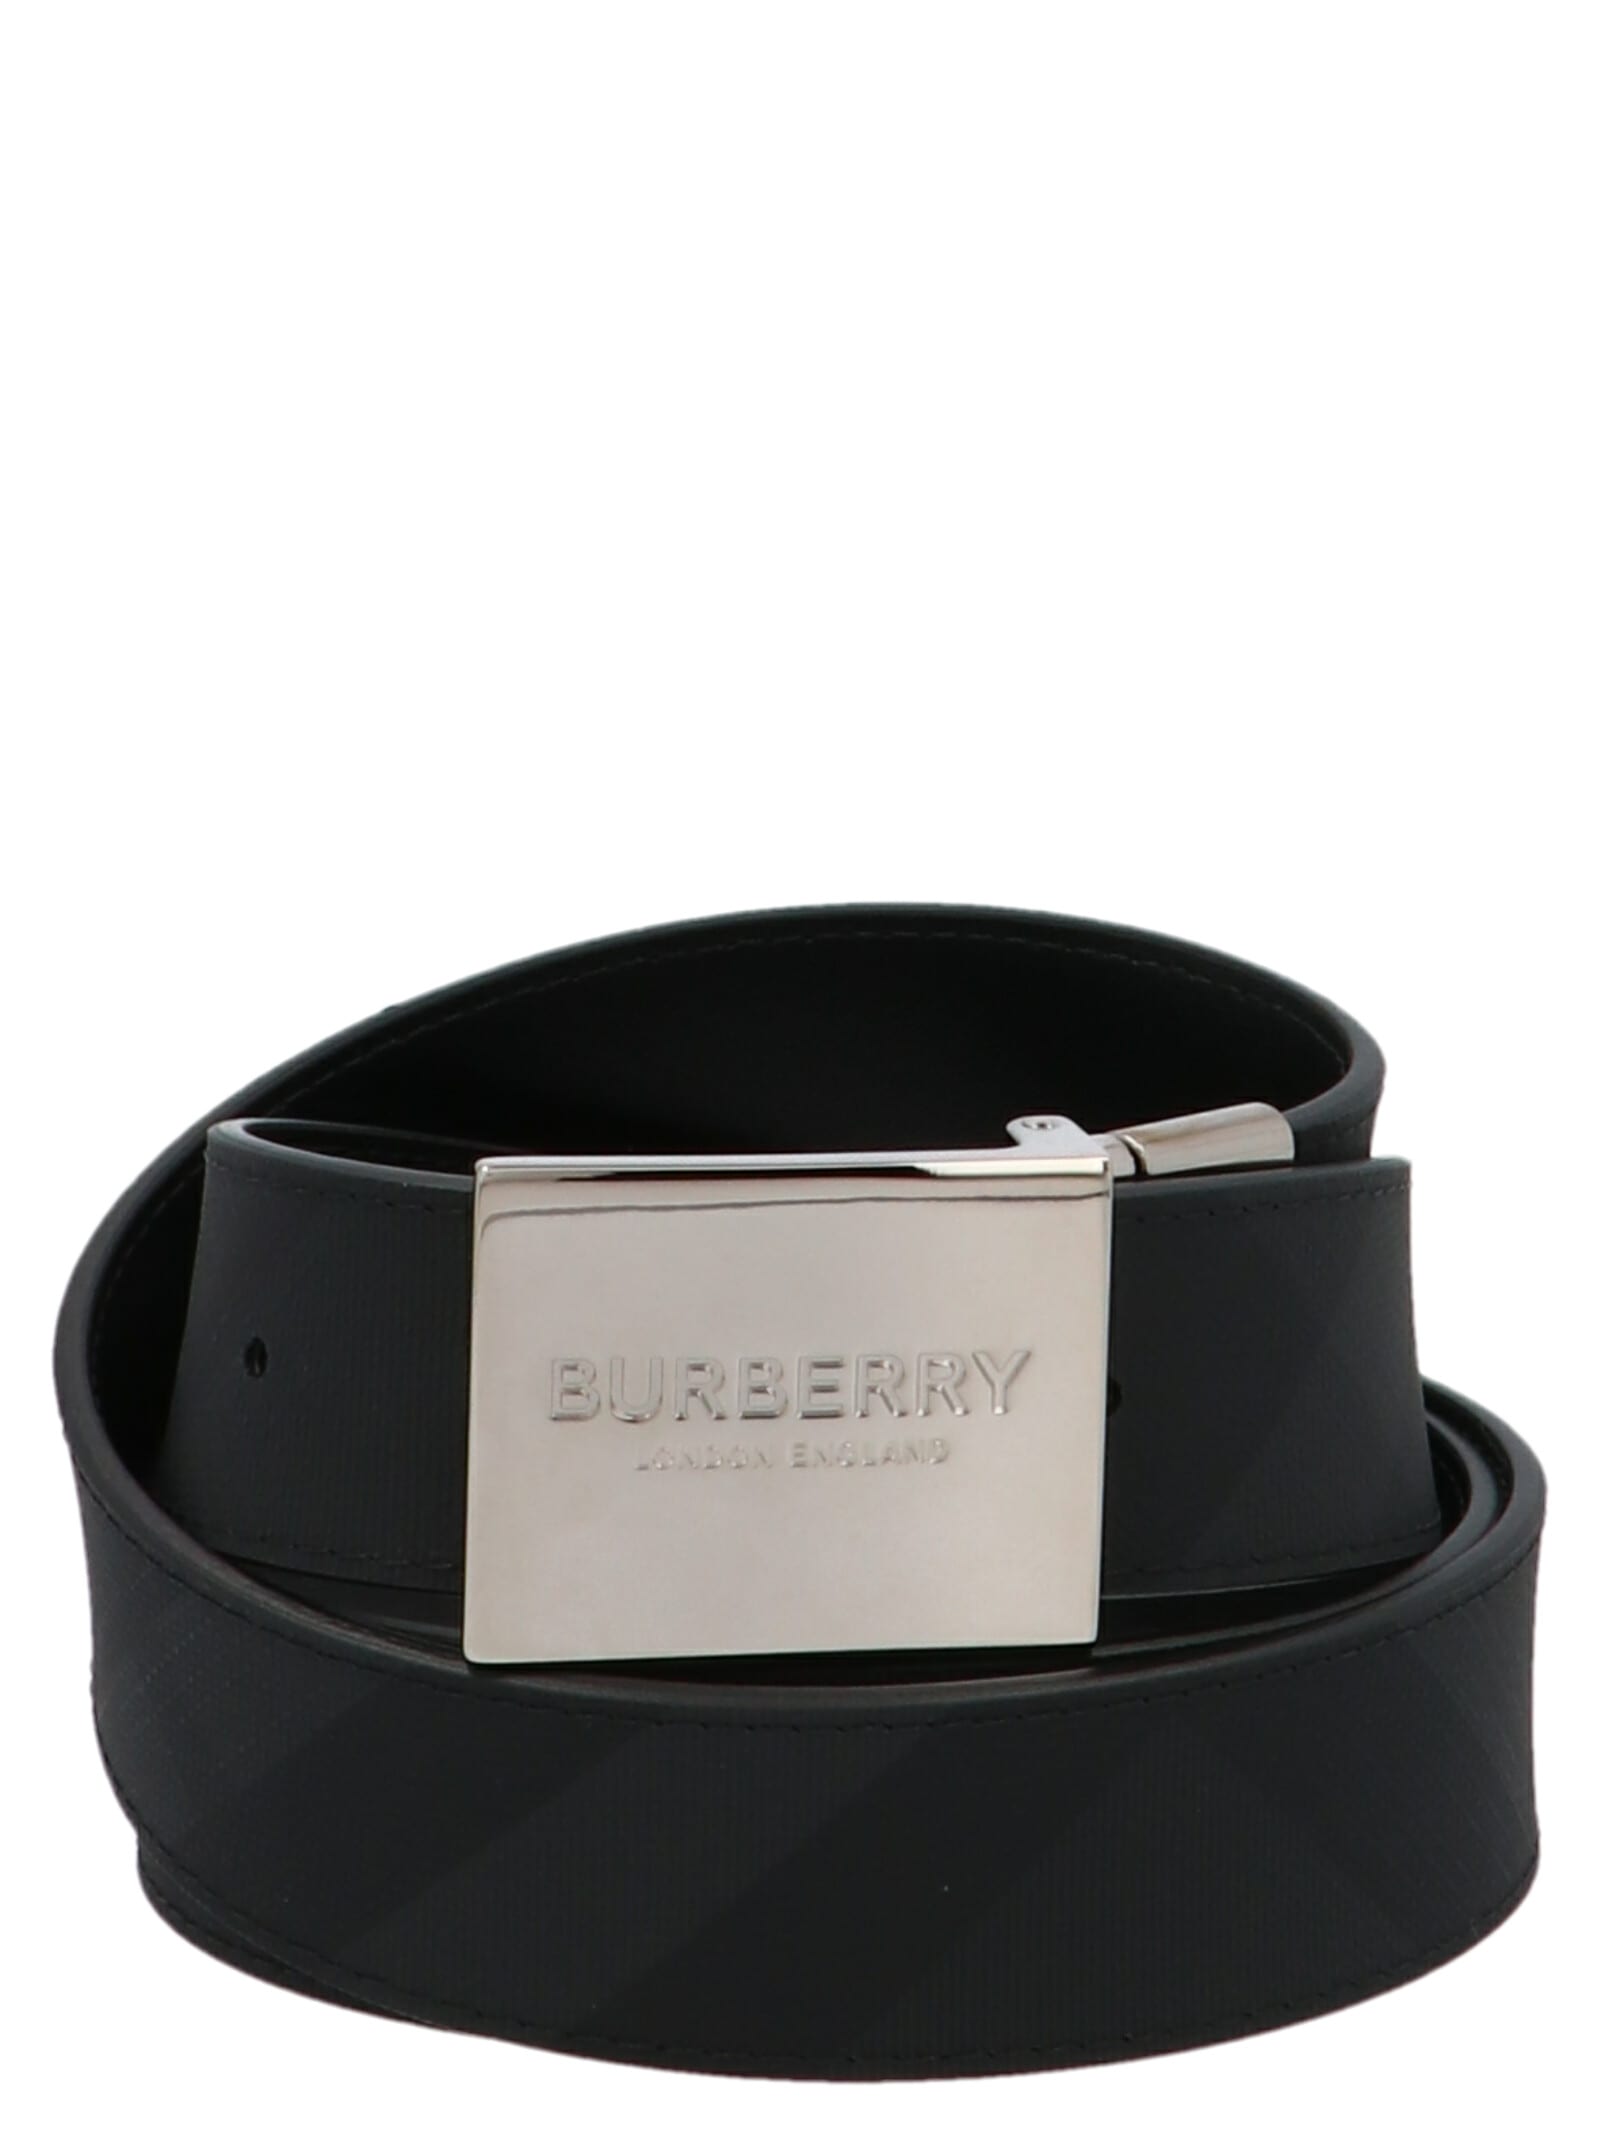 burberry belt sale